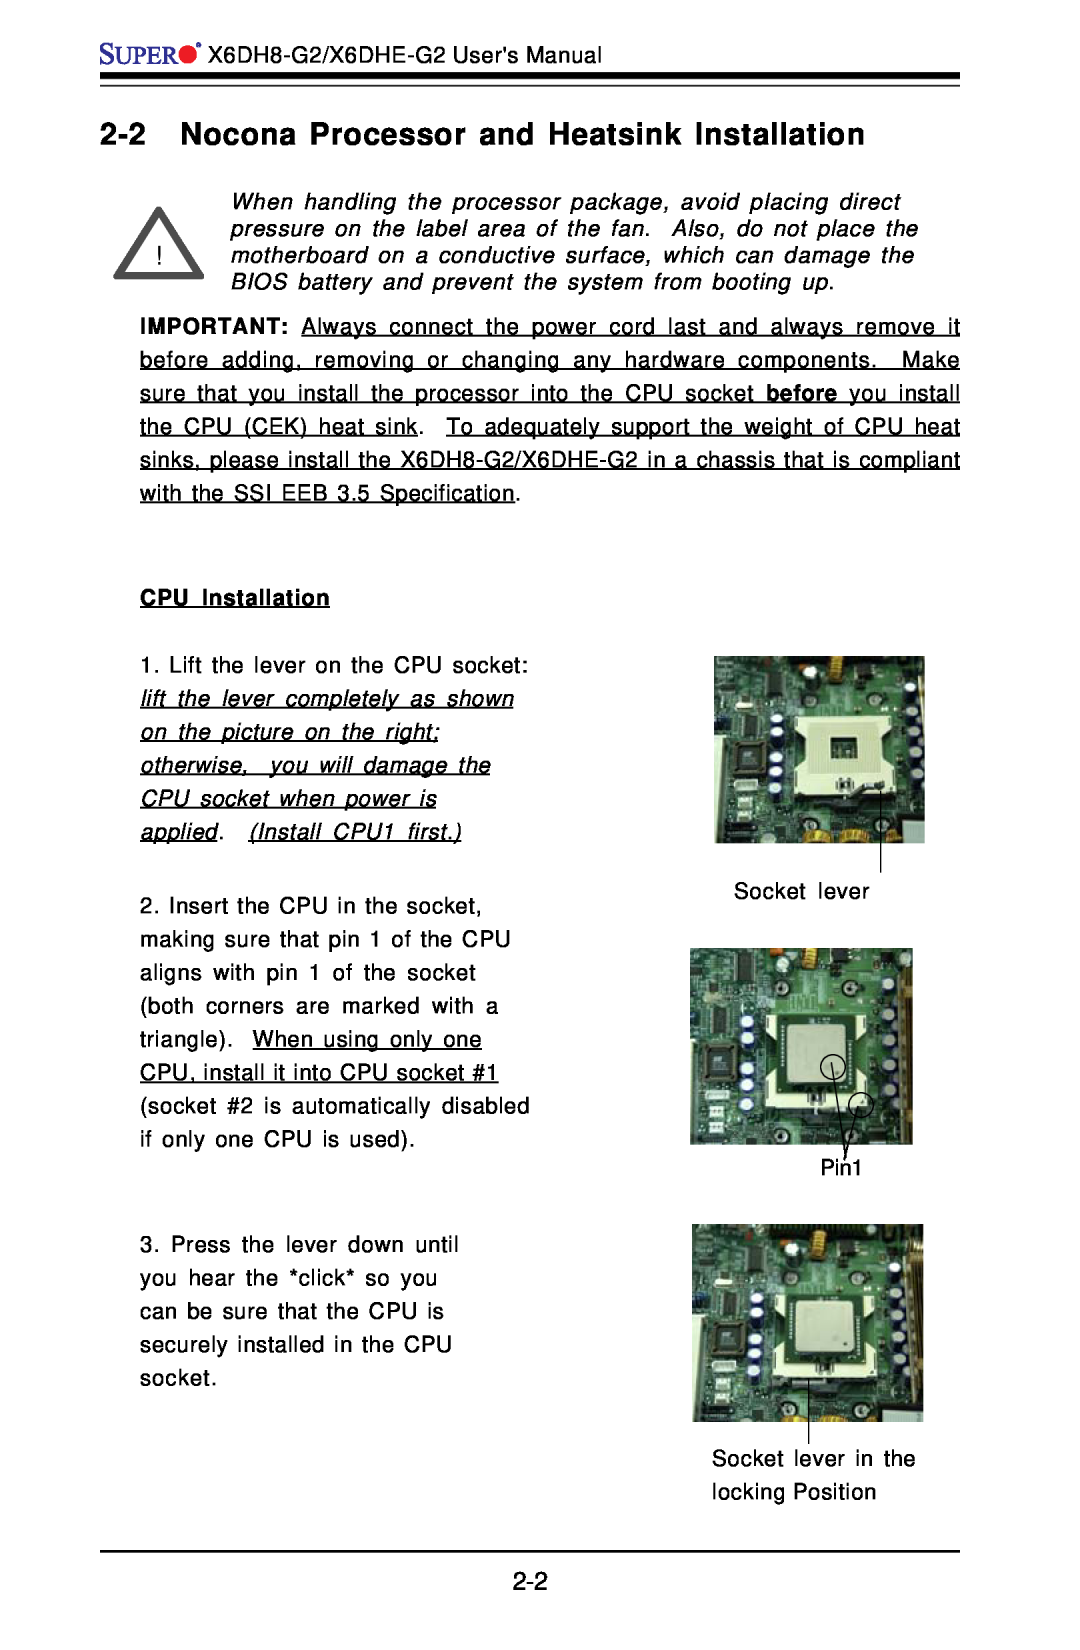 SUPER MICRO Computer X6DH8-G2, X6DHE-G2 manual Nocona Processor and Heatsink Installation, CPU Installation 